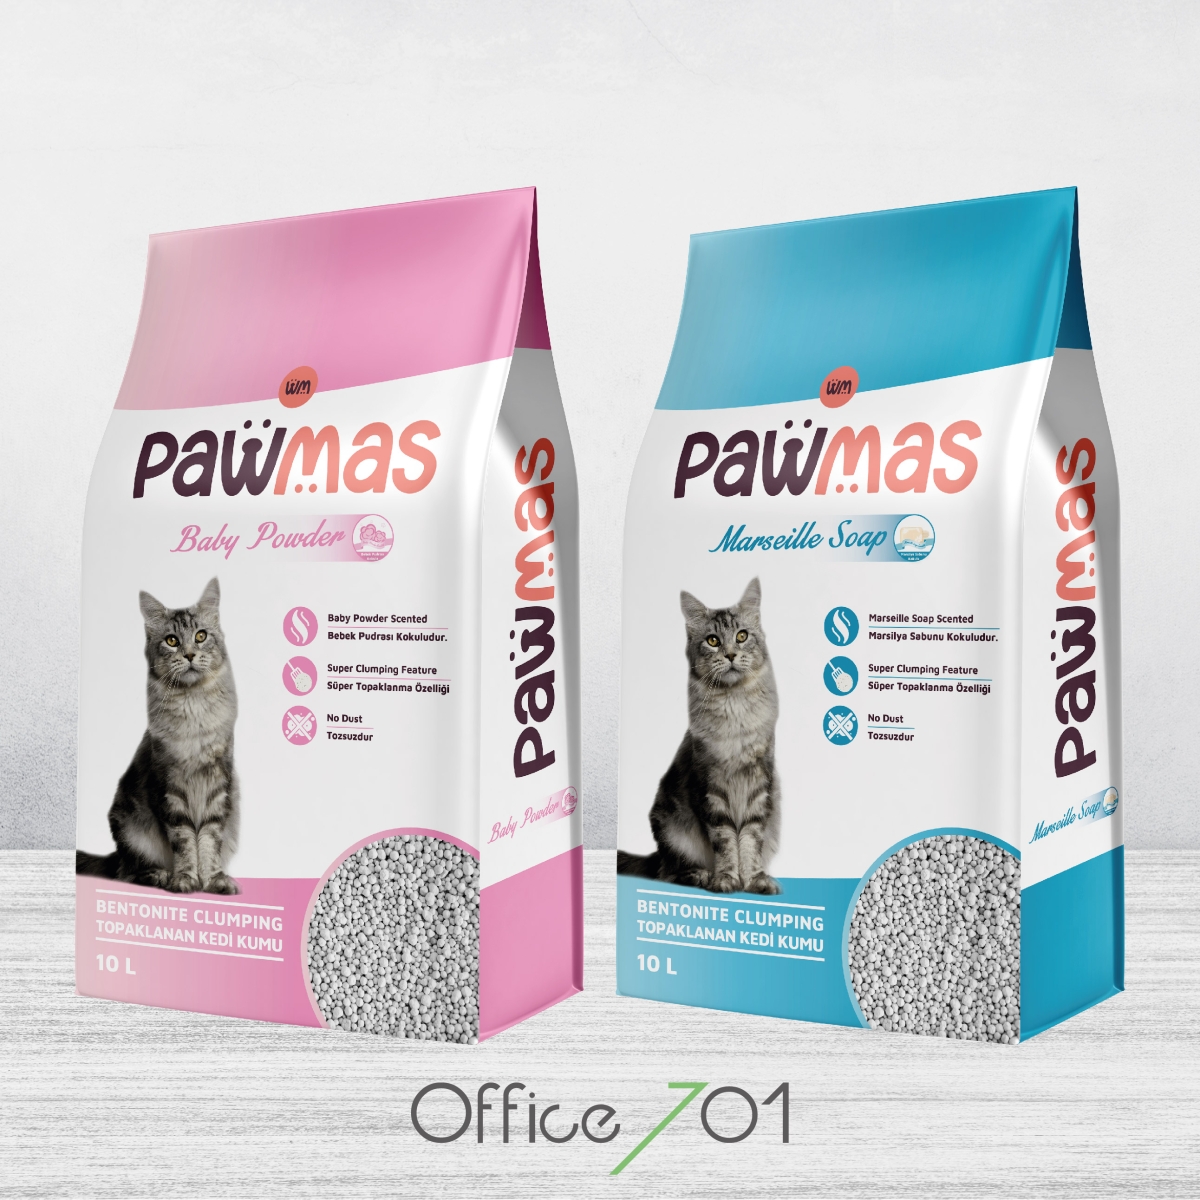 Office701 | Pawmas Bentonit Cat Litter Package Design